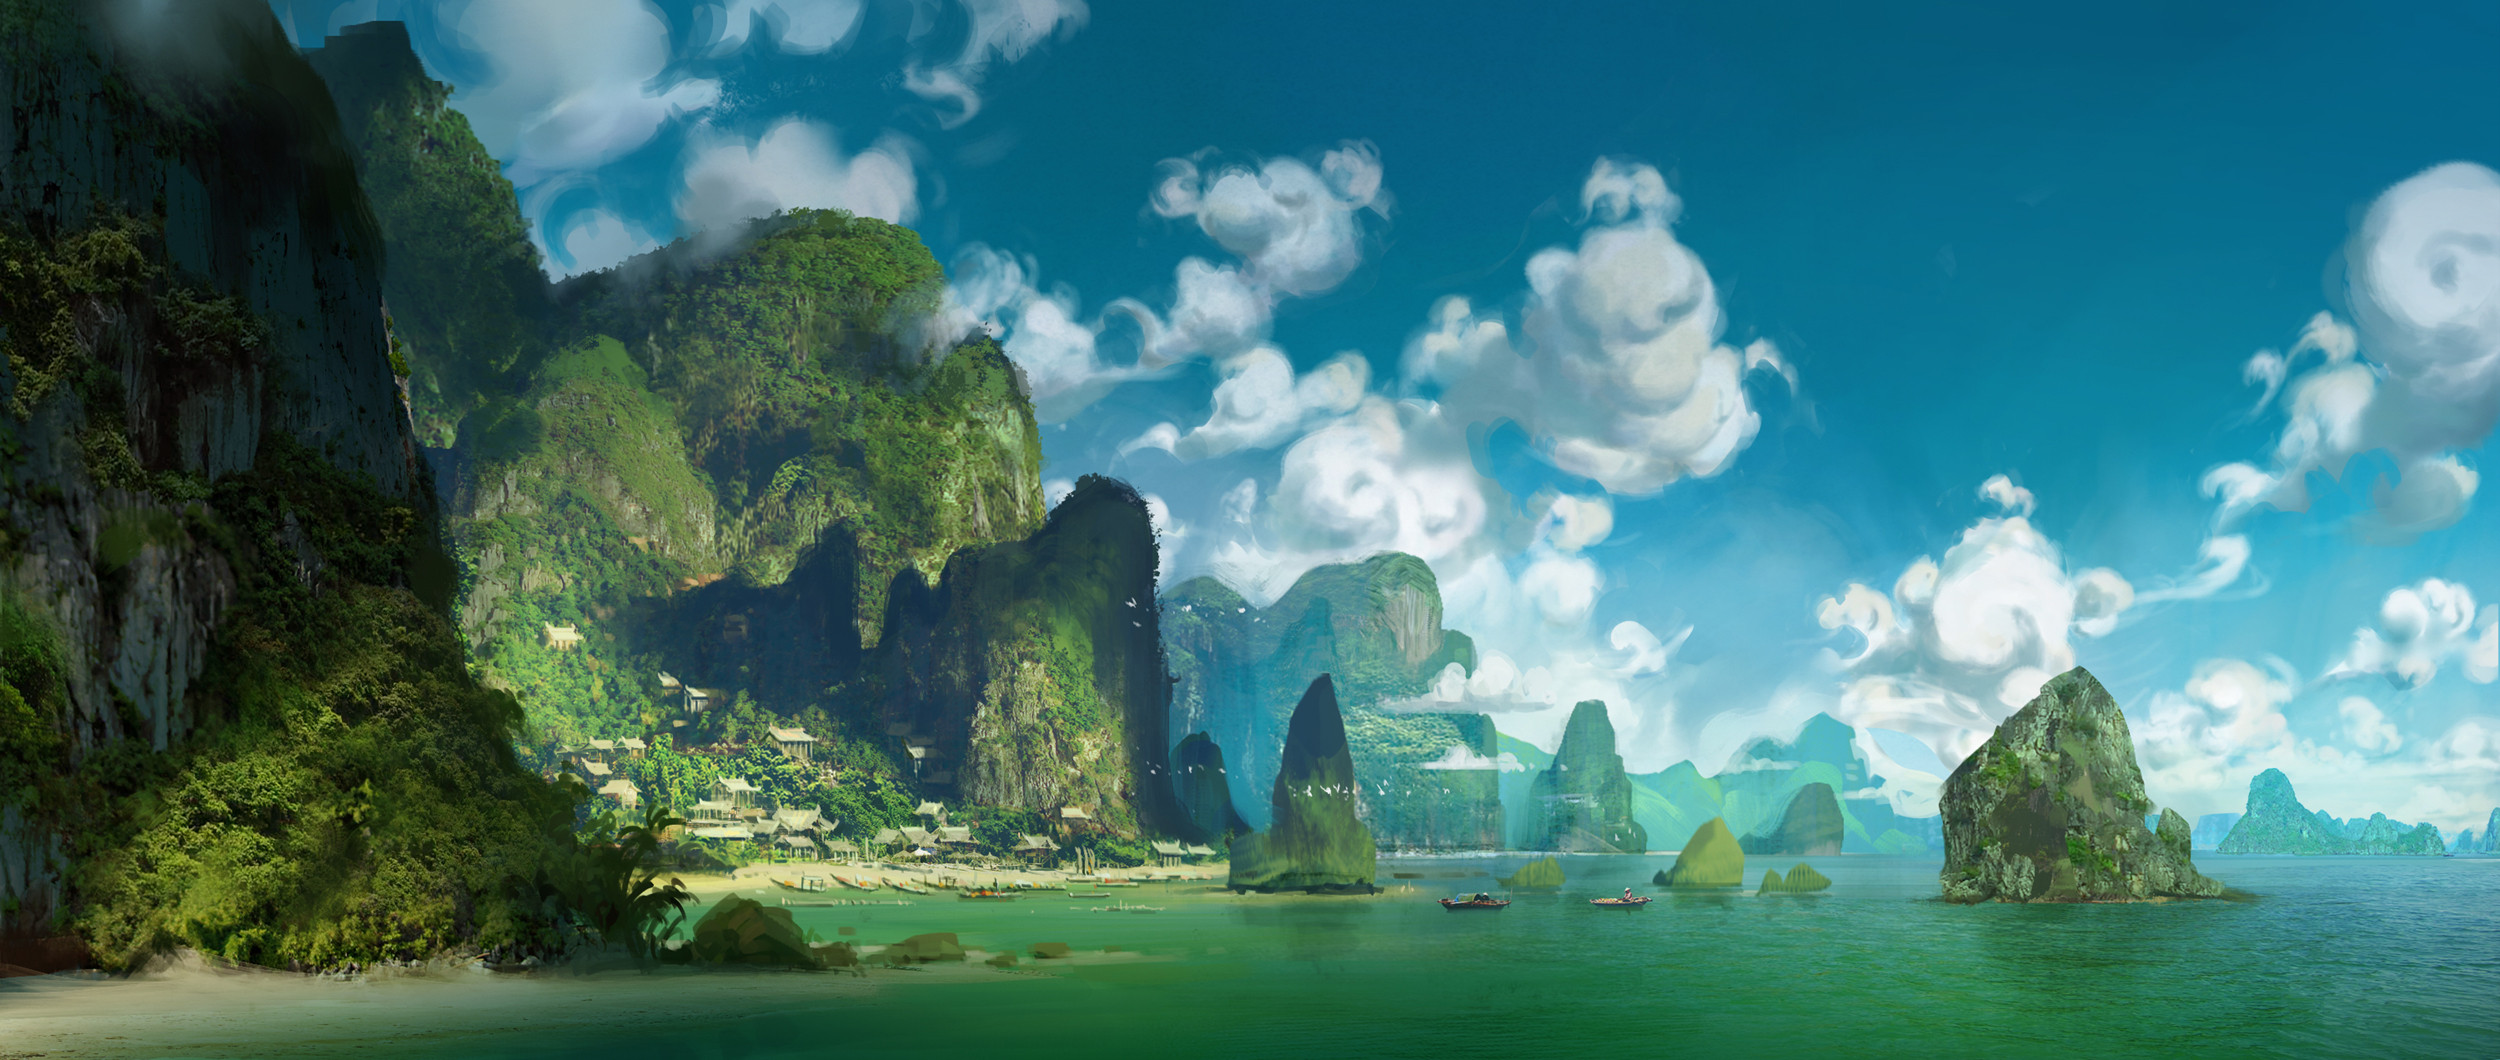 General 2500x1060 artwork digital art landscape island rocks ocean view sky clouds water